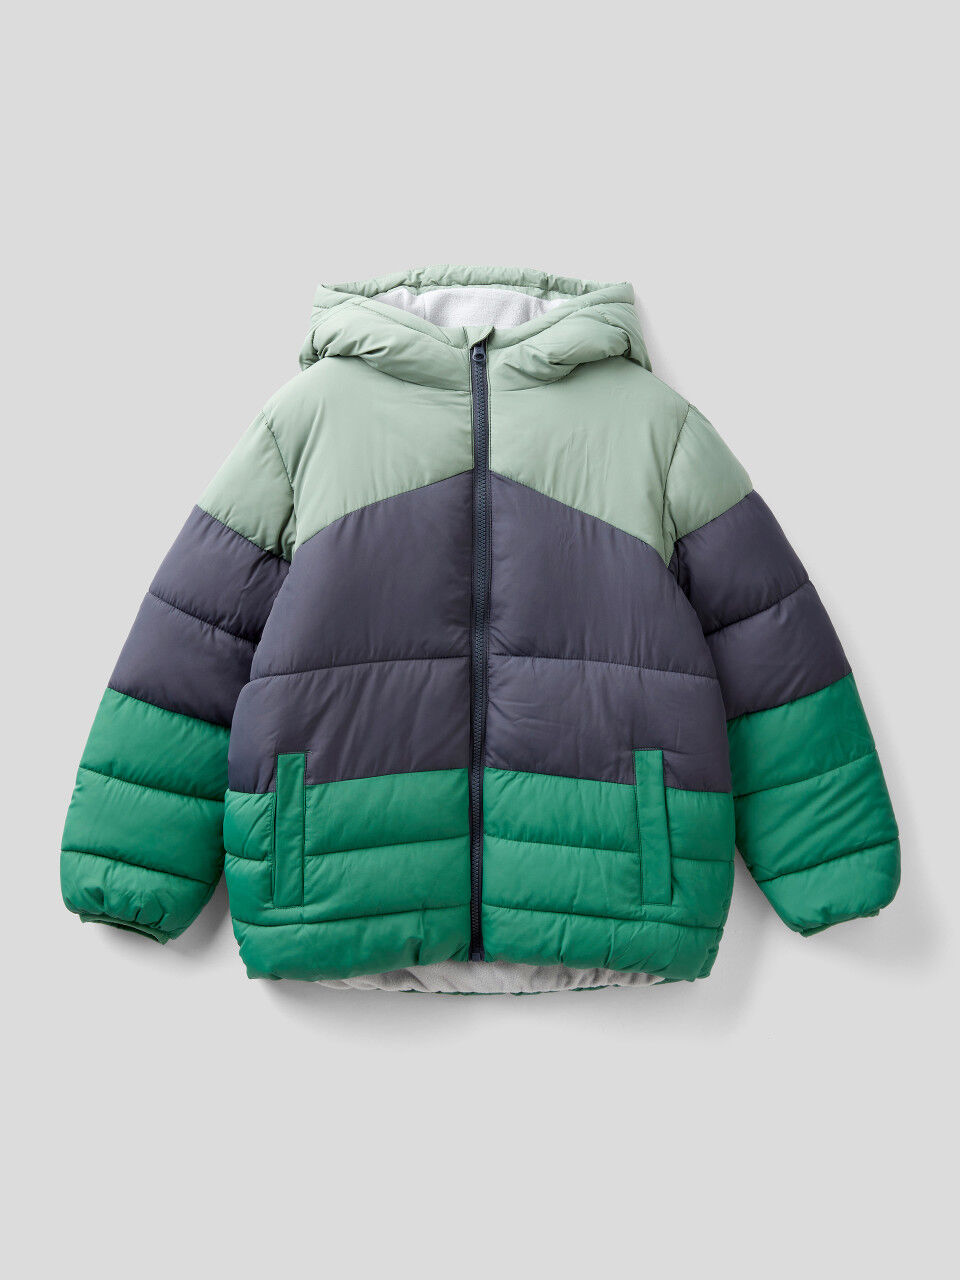 Benetton benetton boys jacket size XL 10-11 Years 